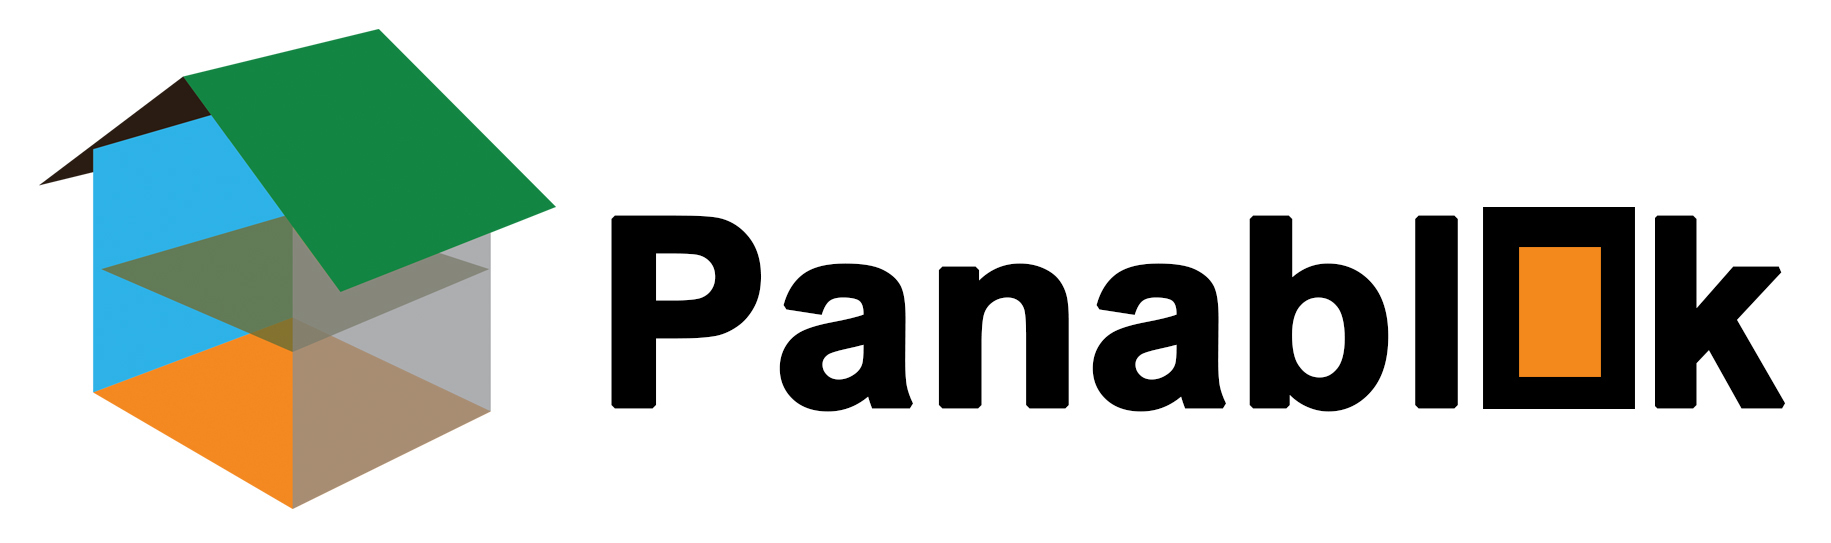 panablok logo wide